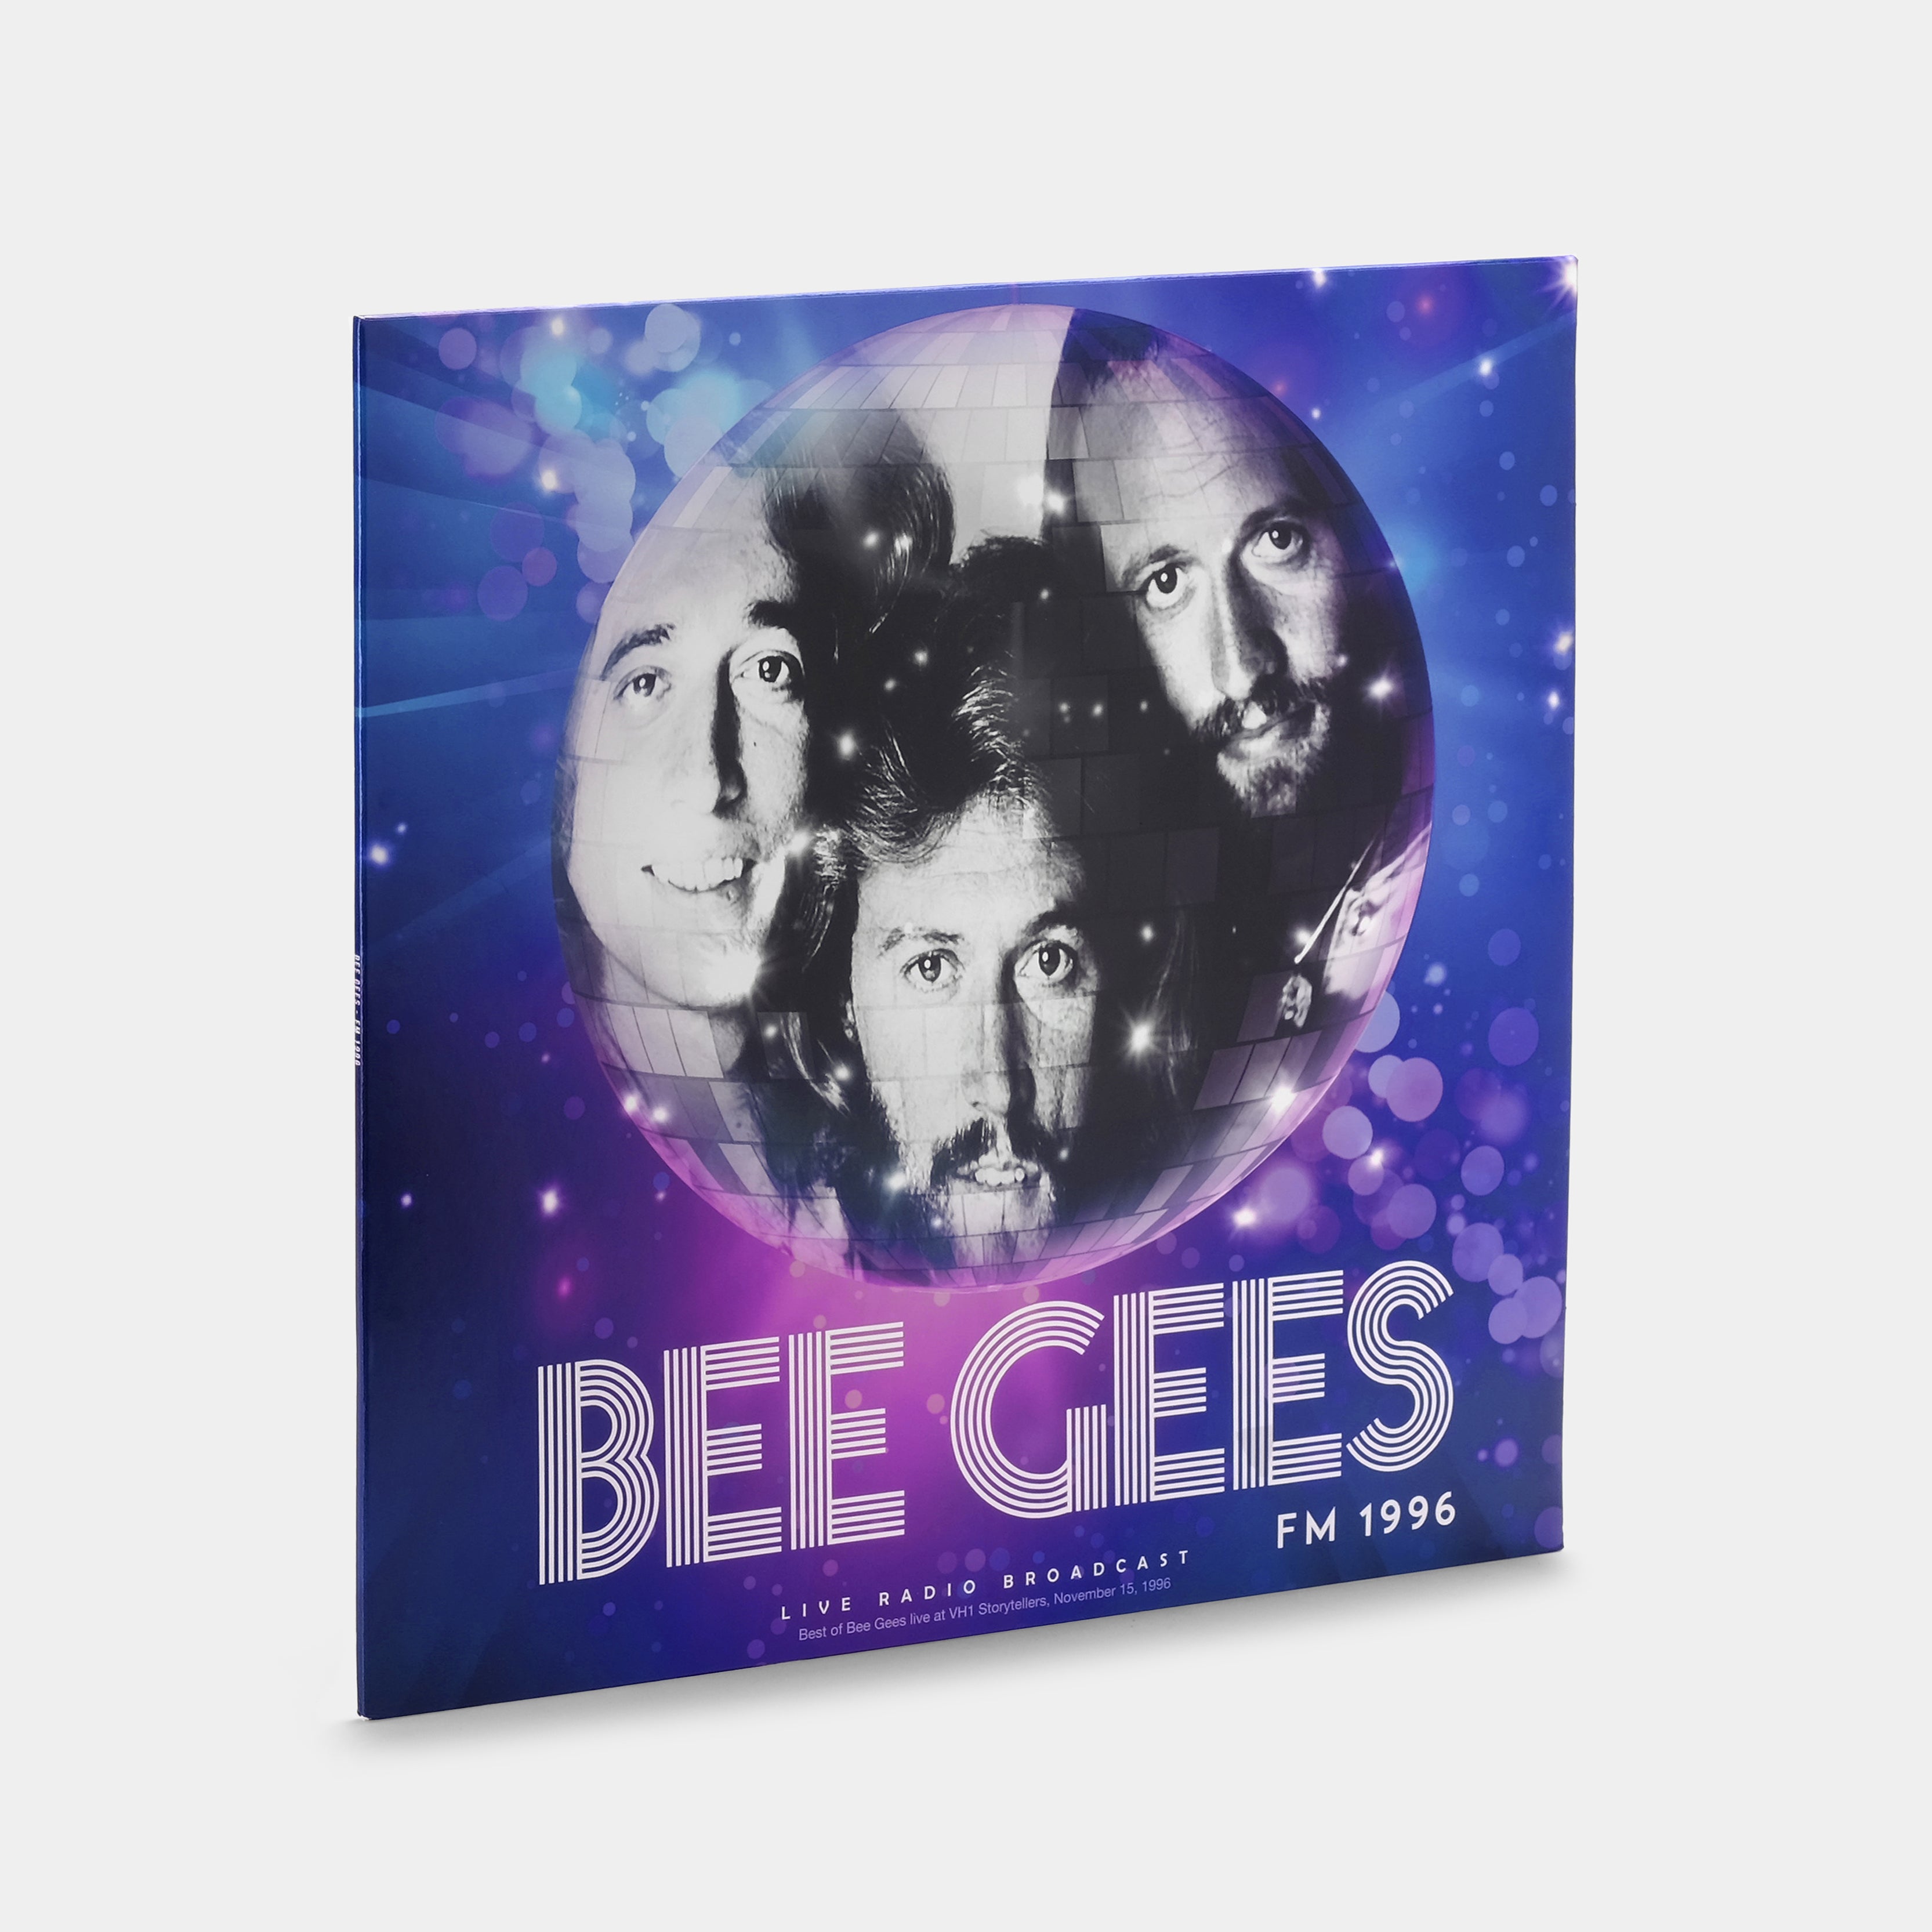 Bee Gees - FM 1996 LP Vinyl Record